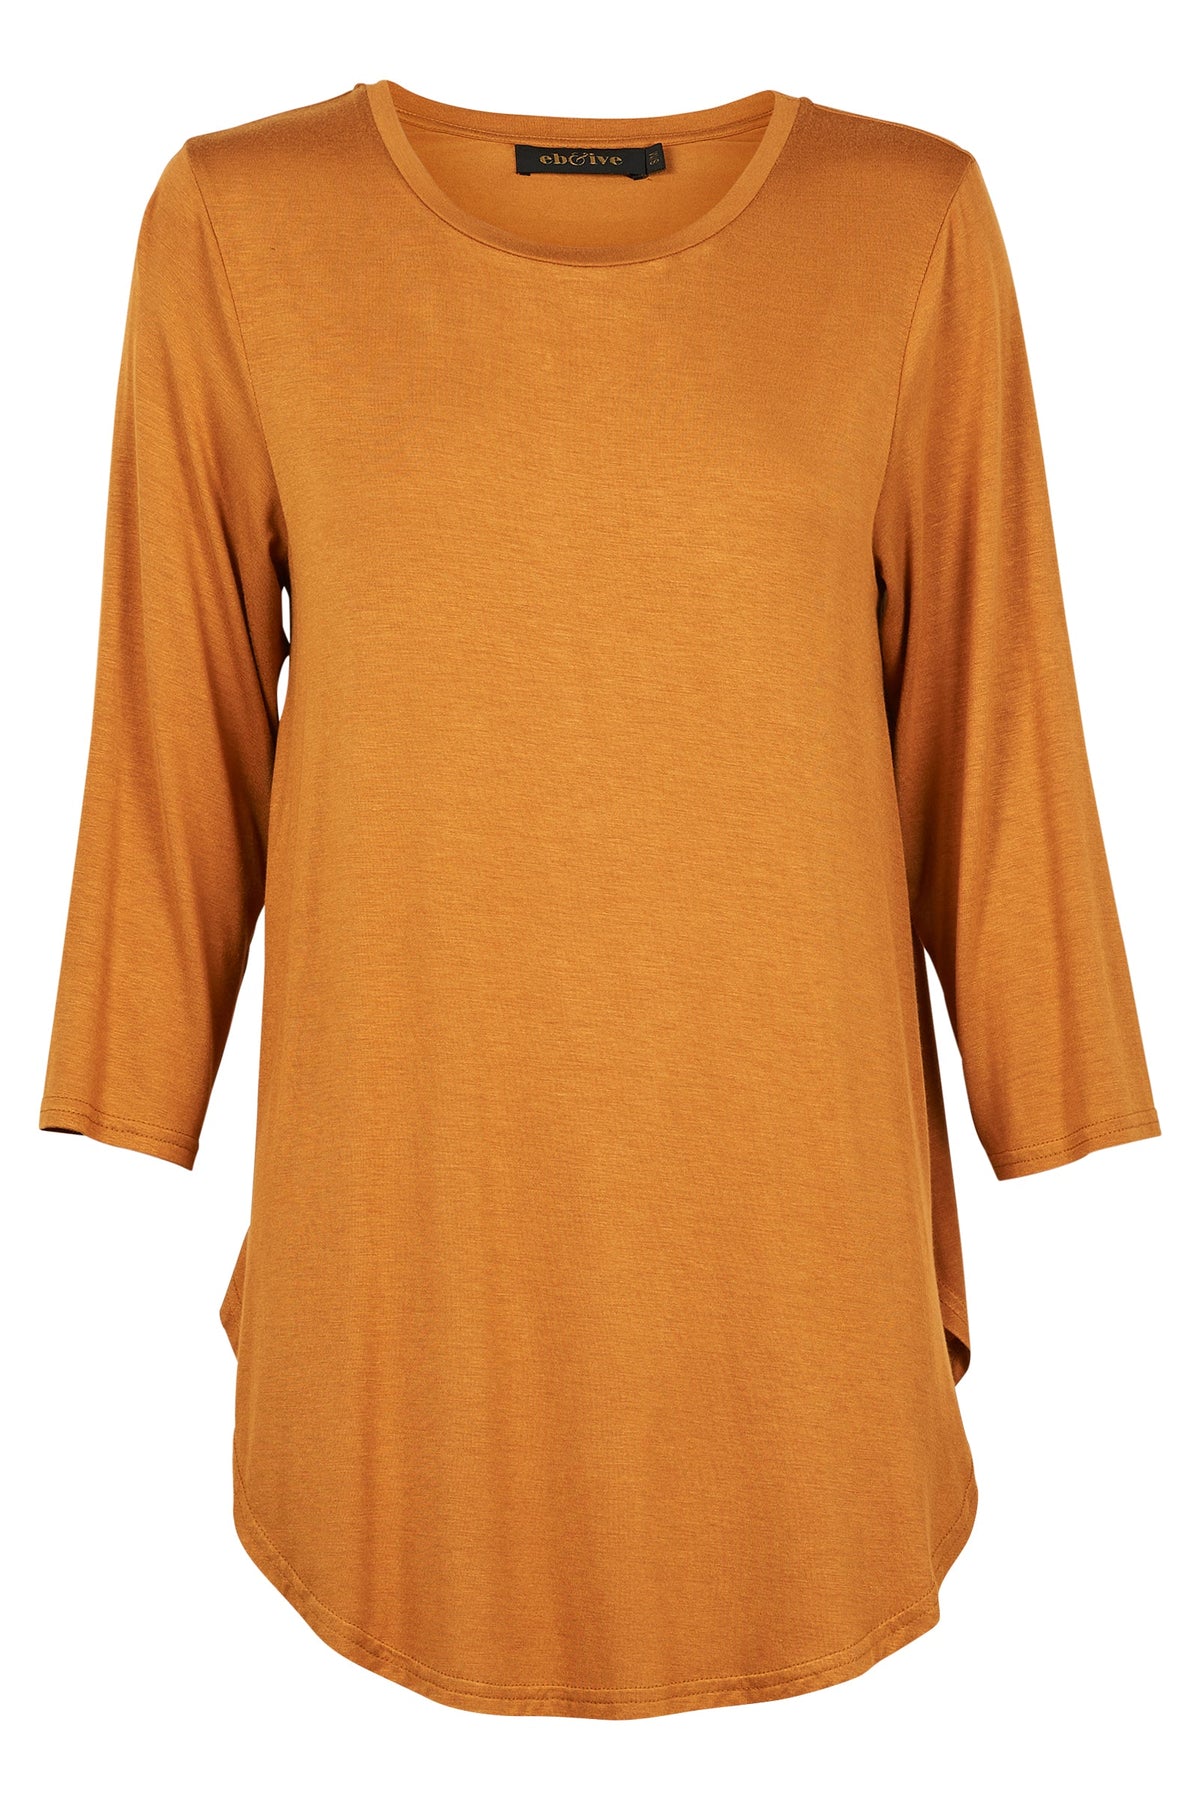 Muse T Shirt - EB & IVE Top S/M M/L L/XL Saffron NZ LUMA